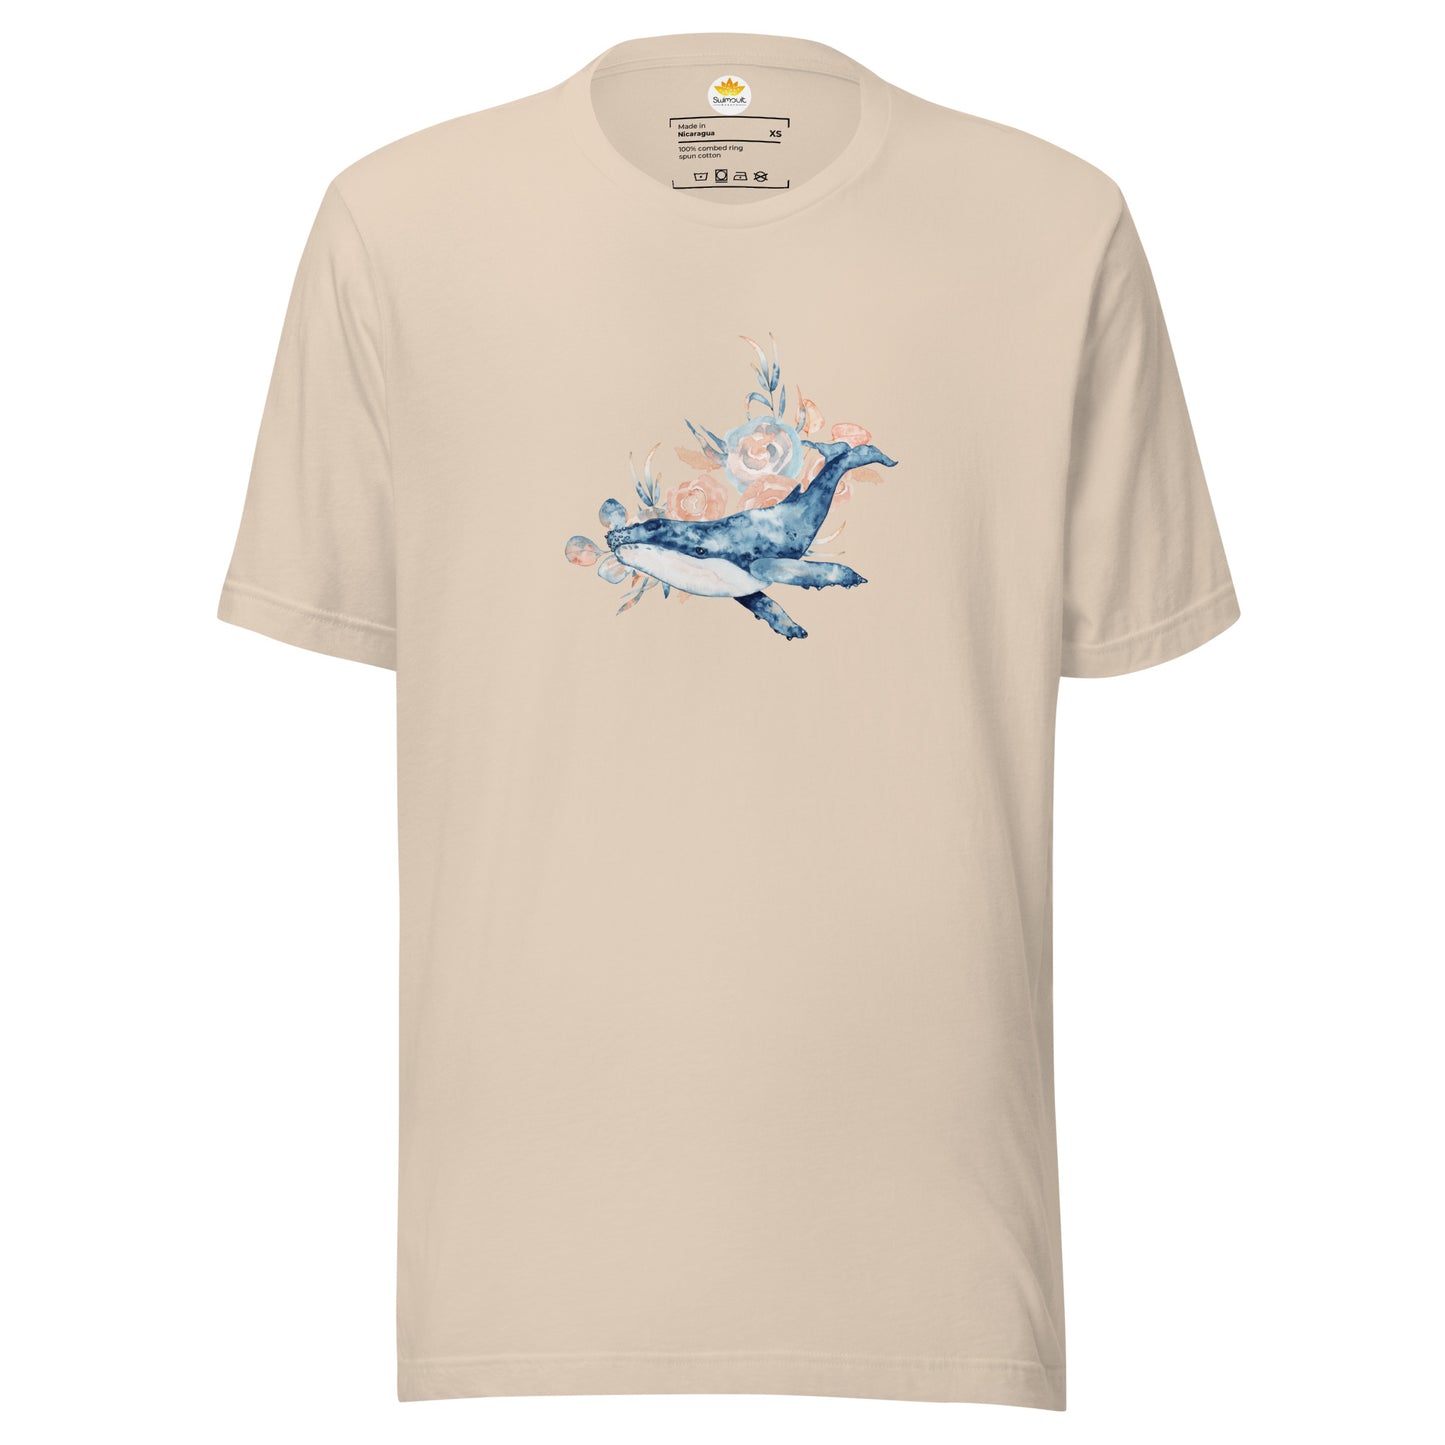 Sea Life - Whale Print Short Sleeve T-Shirt (Sand)